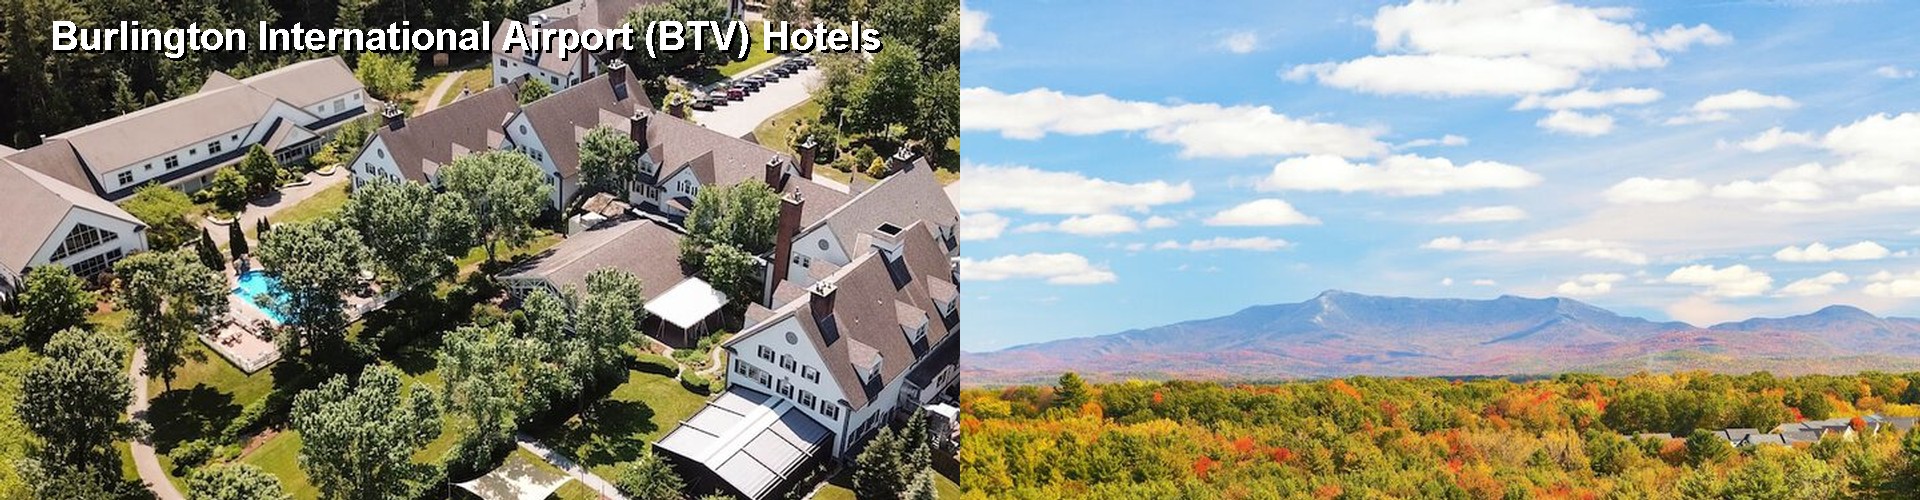 3 Best Hotels near Burlington International Airport (BTV)